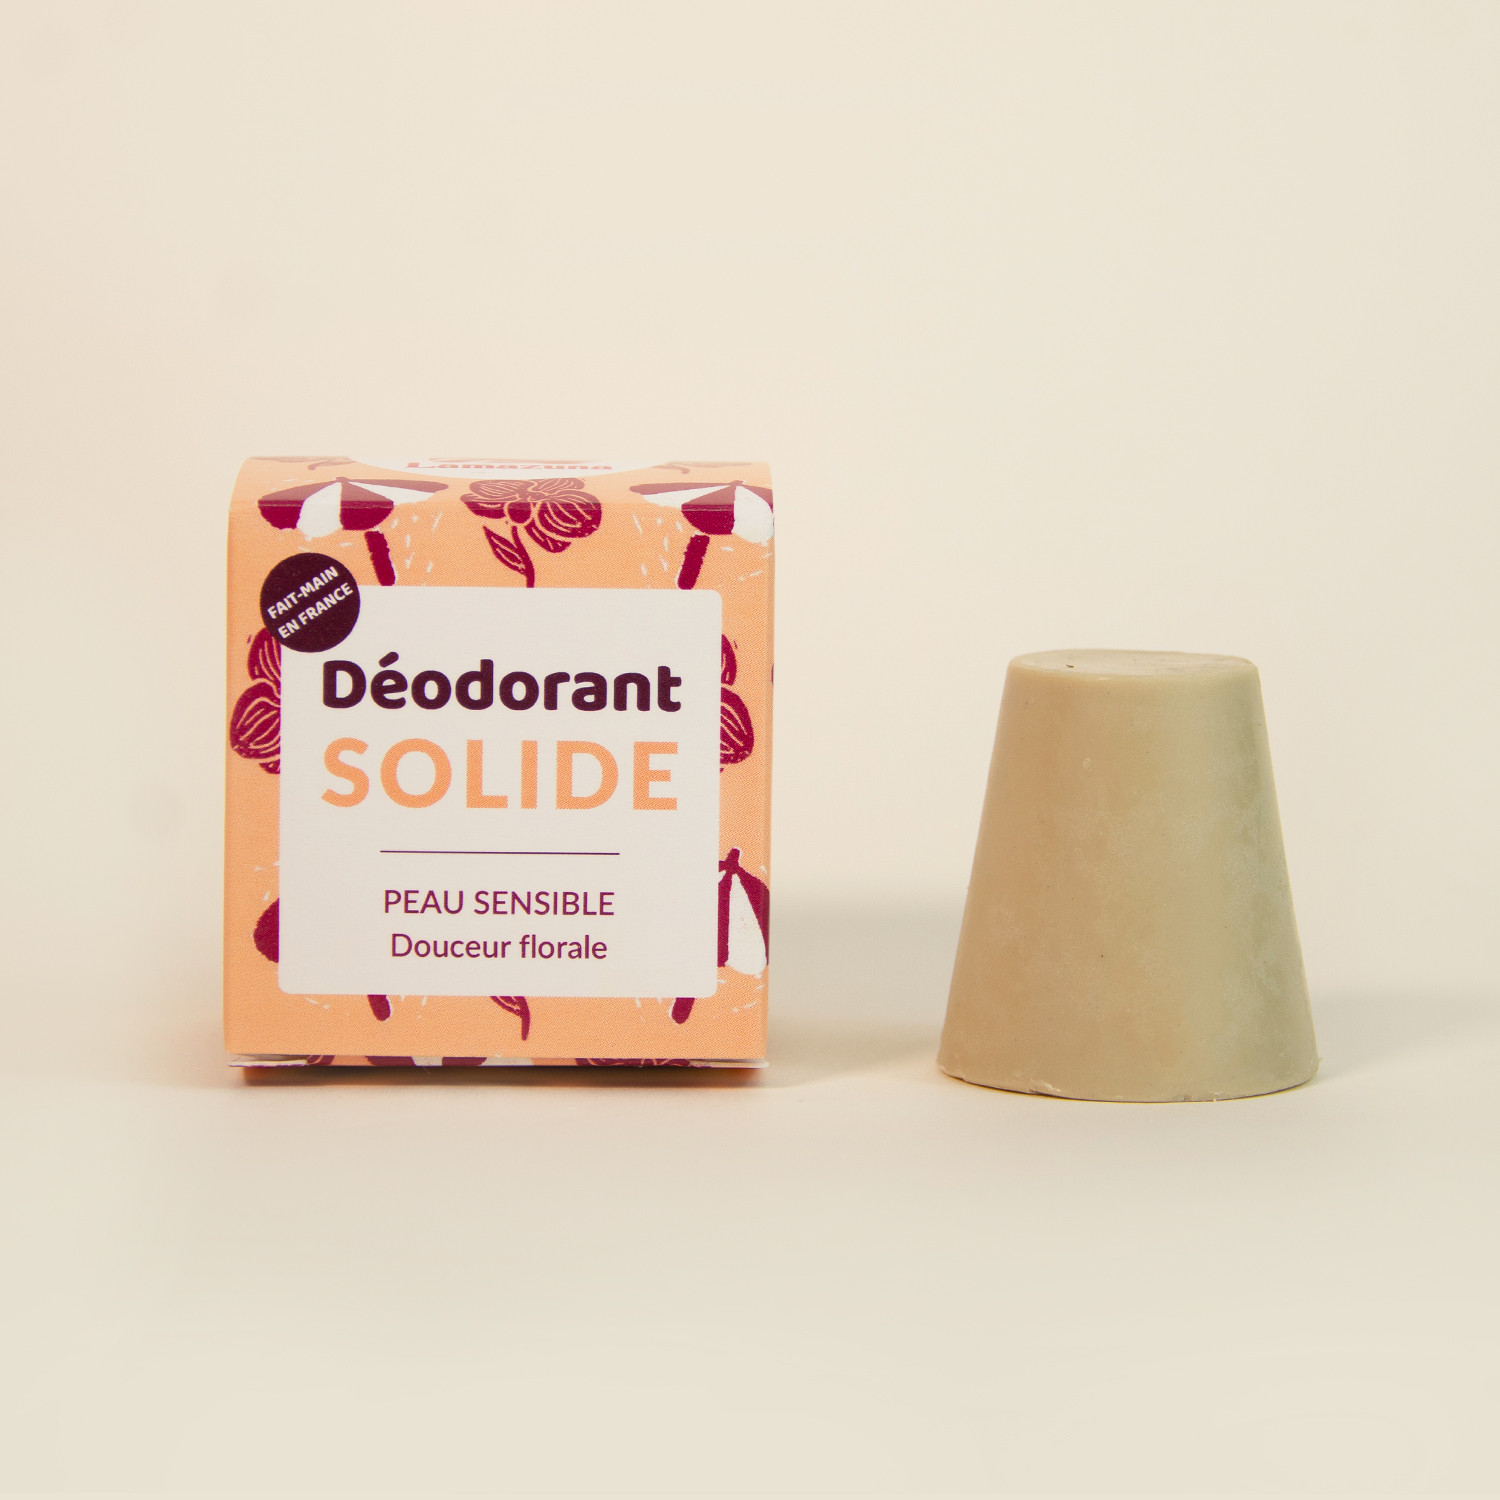 Deodorant for sensitive...